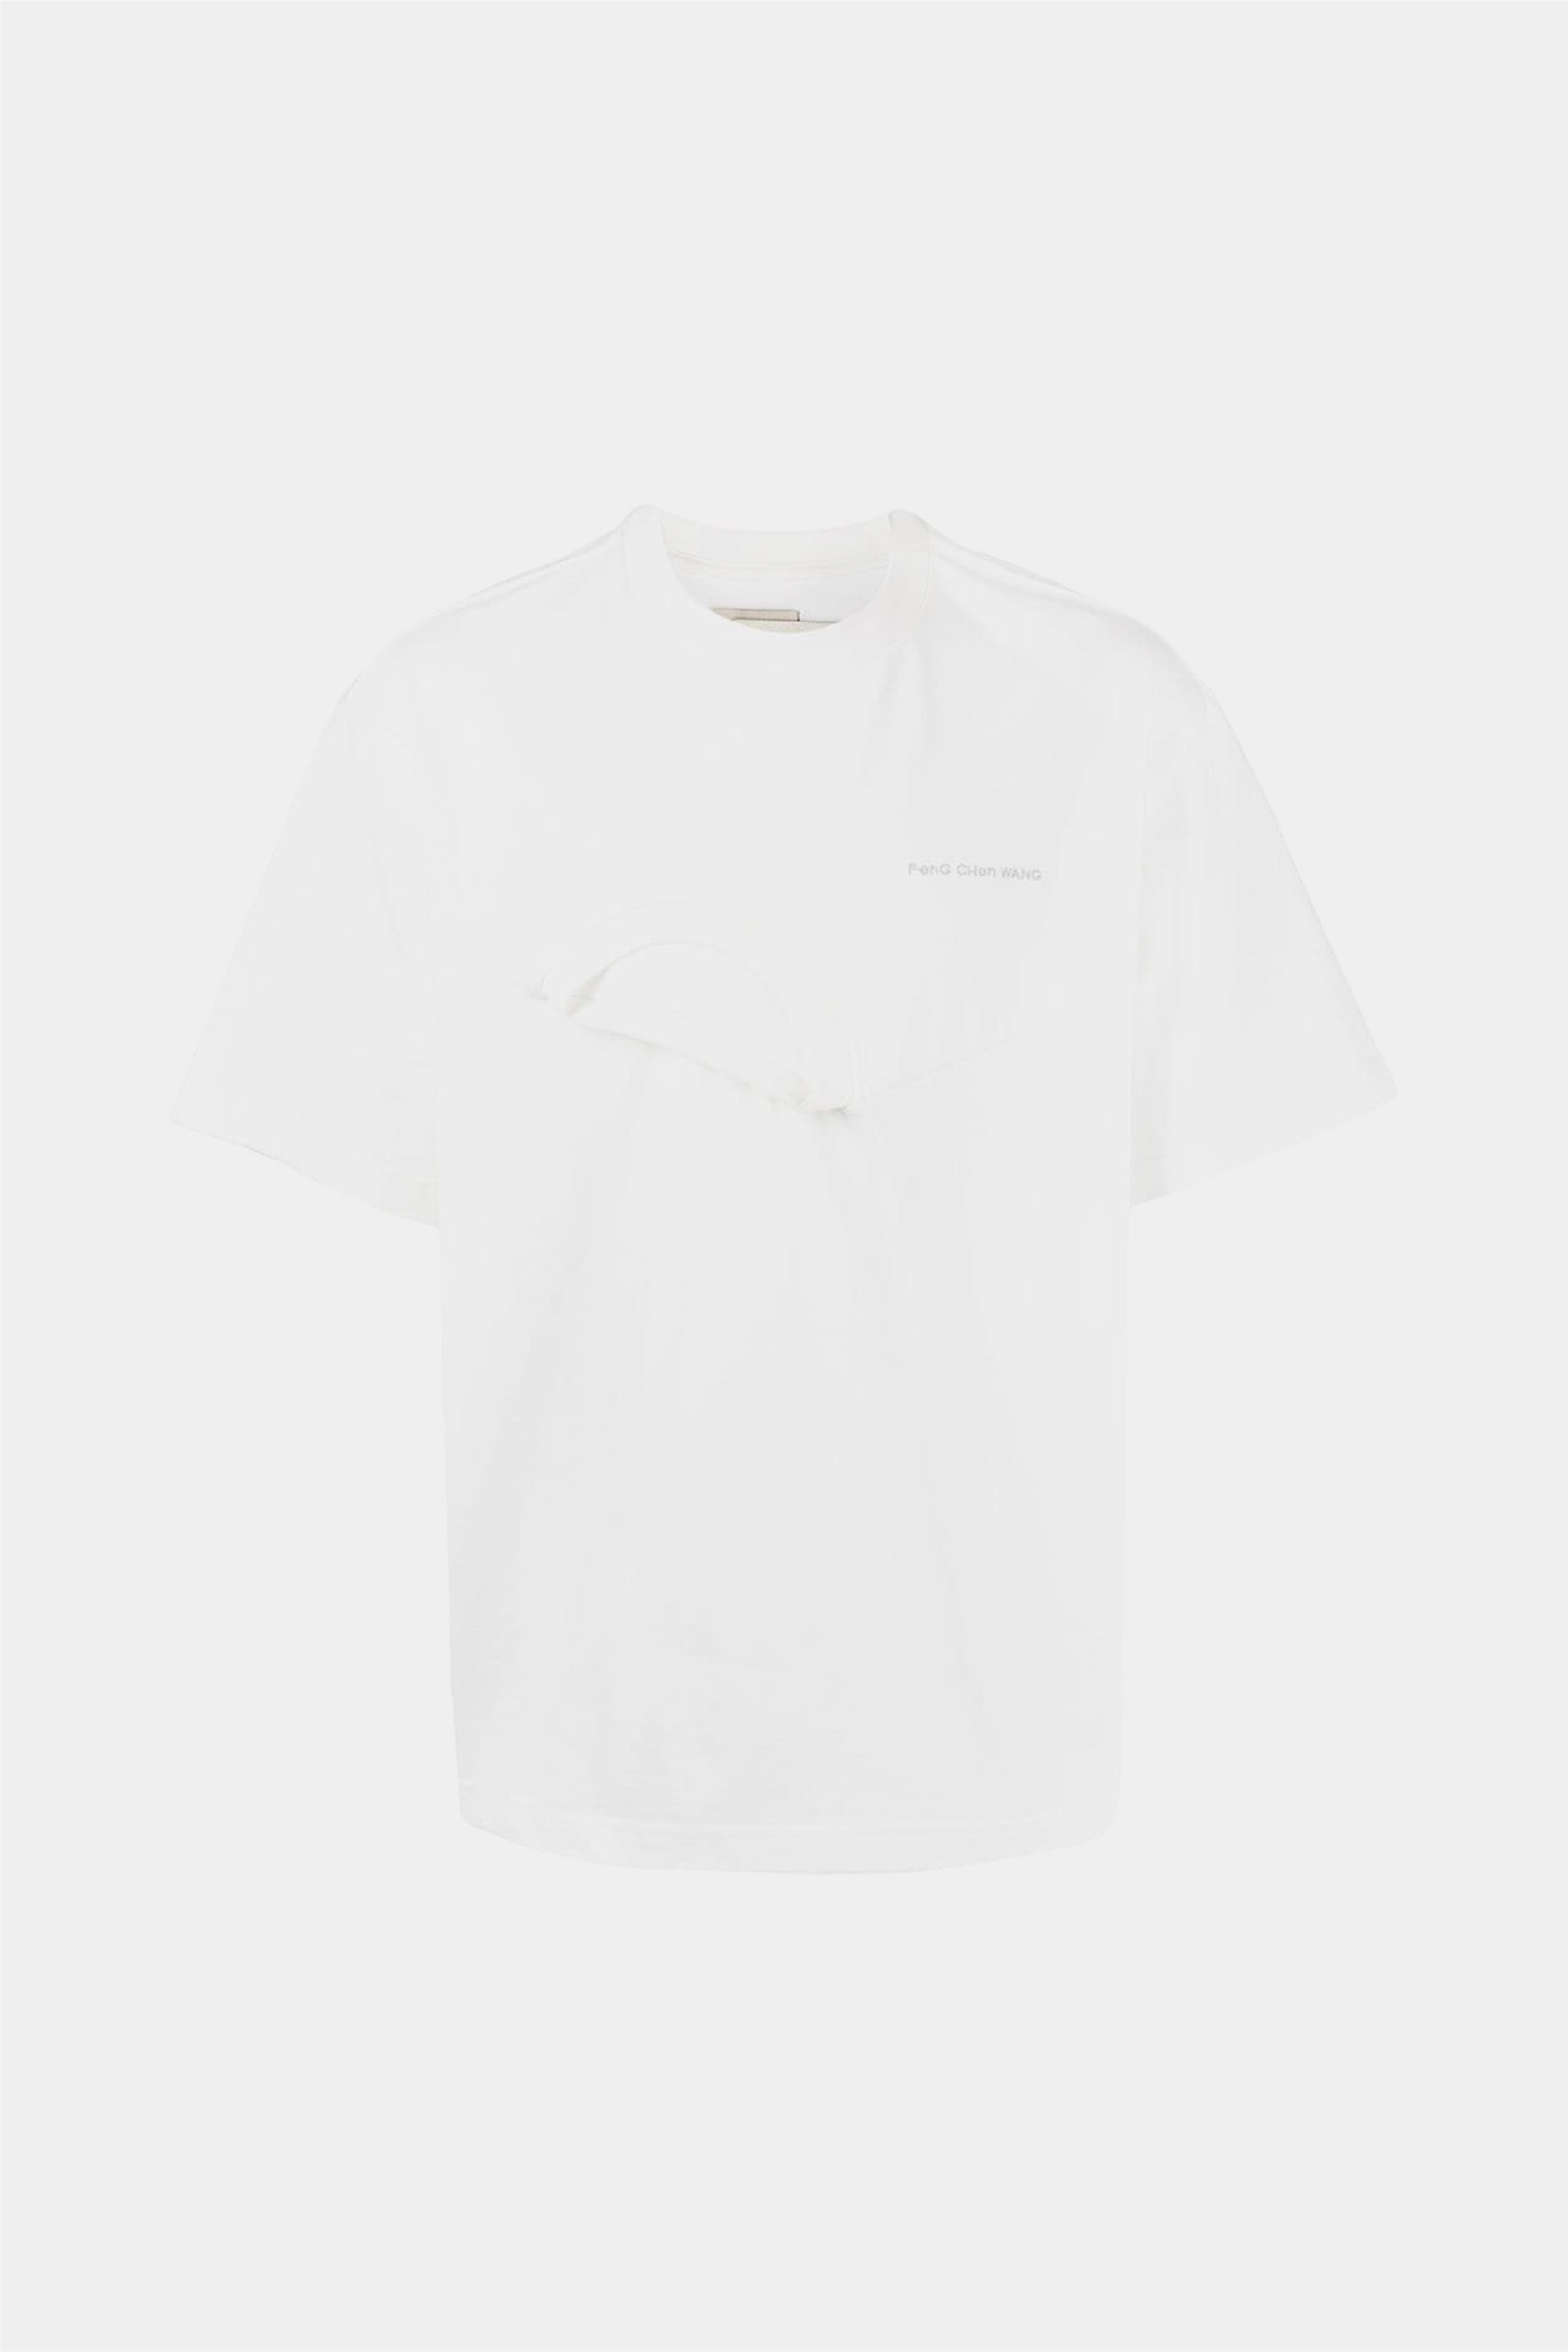 Selectshop FRAME - FENG CHEN WANG Panelled Collar Tee T-Shirts Dubai